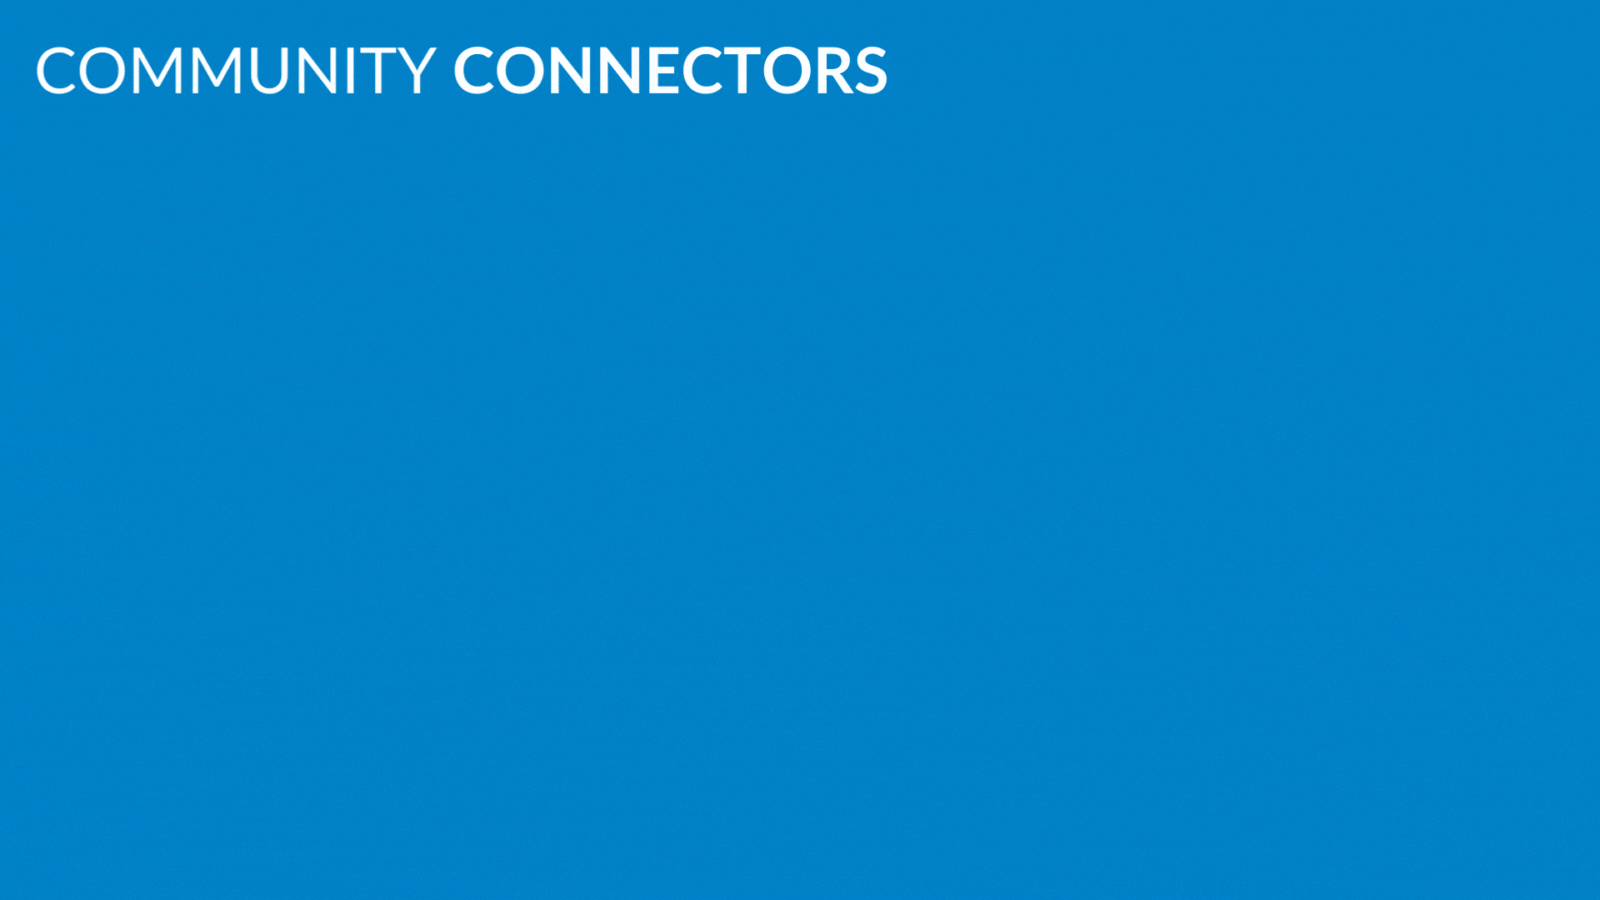 Announcing the inaugural Community Connectors program participants!